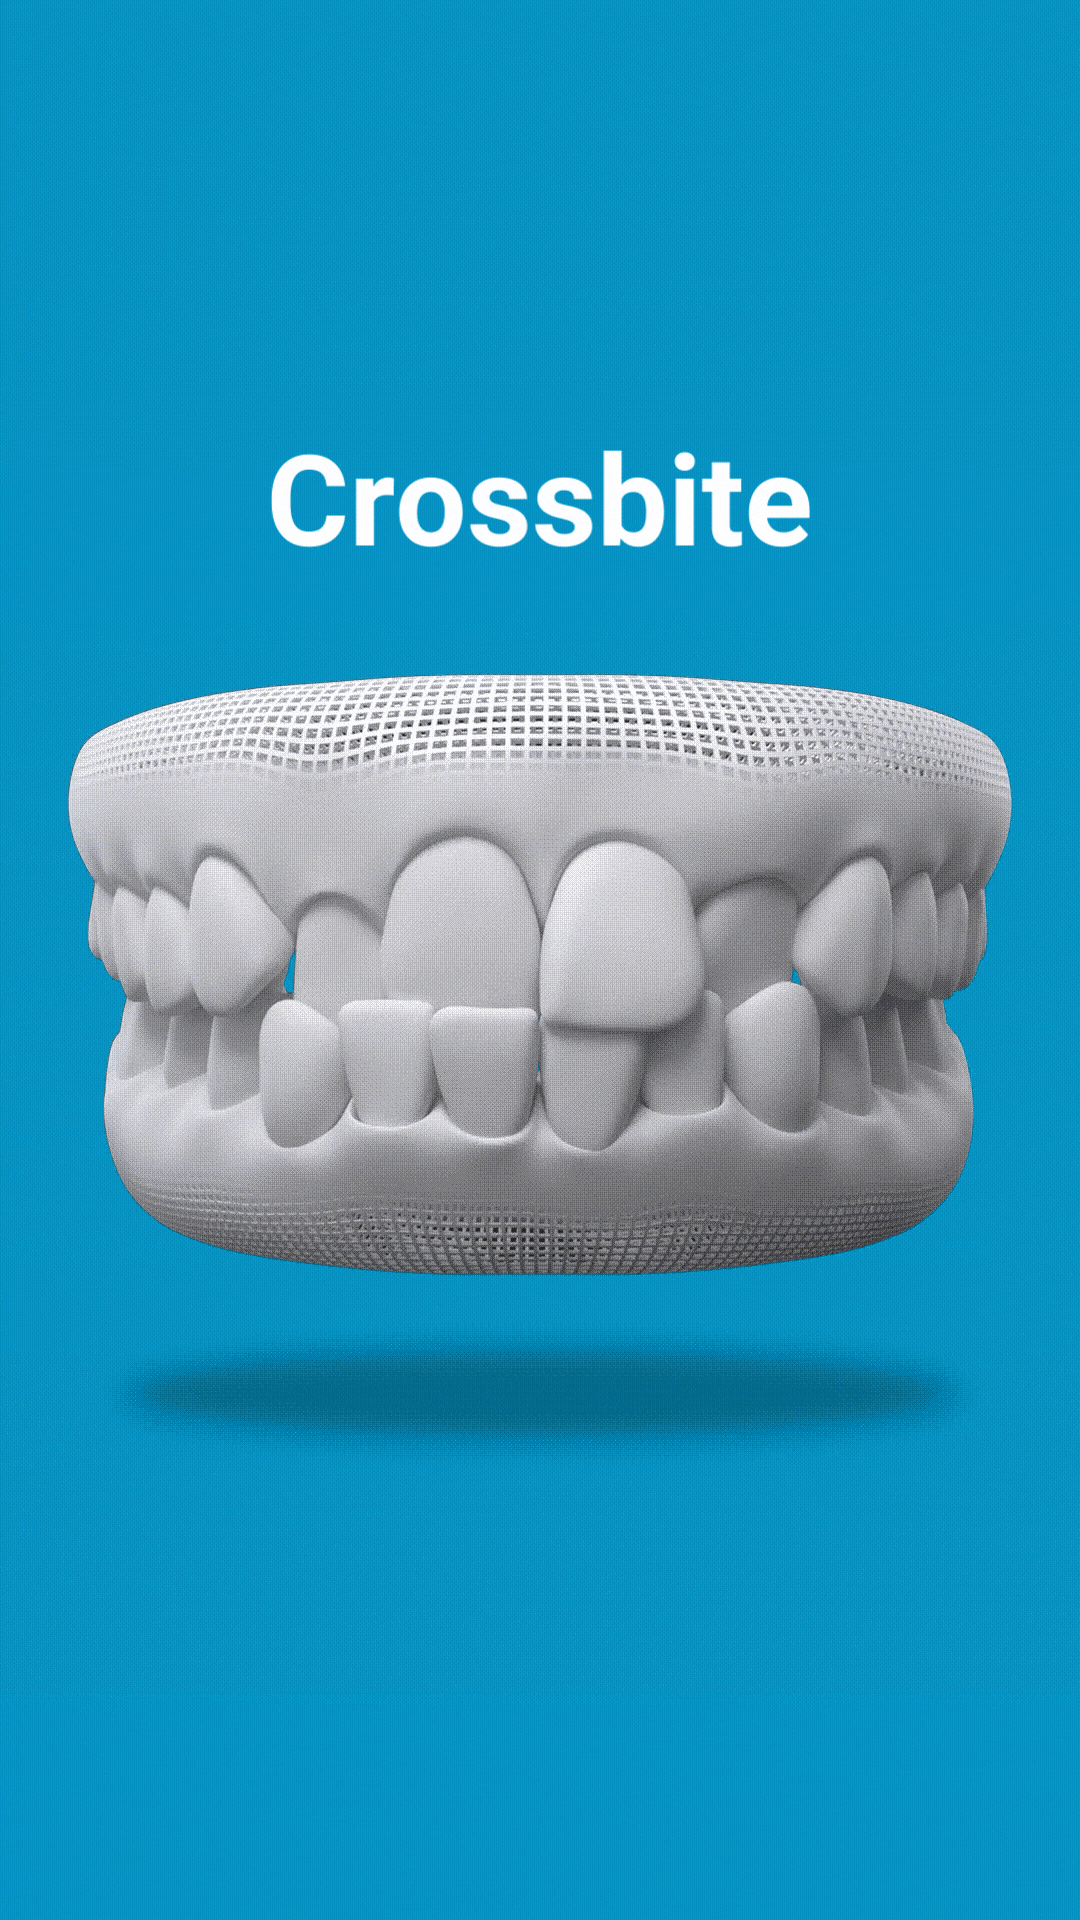 belmont dentistry scottsdale invisalign can fix dental crossbite issues